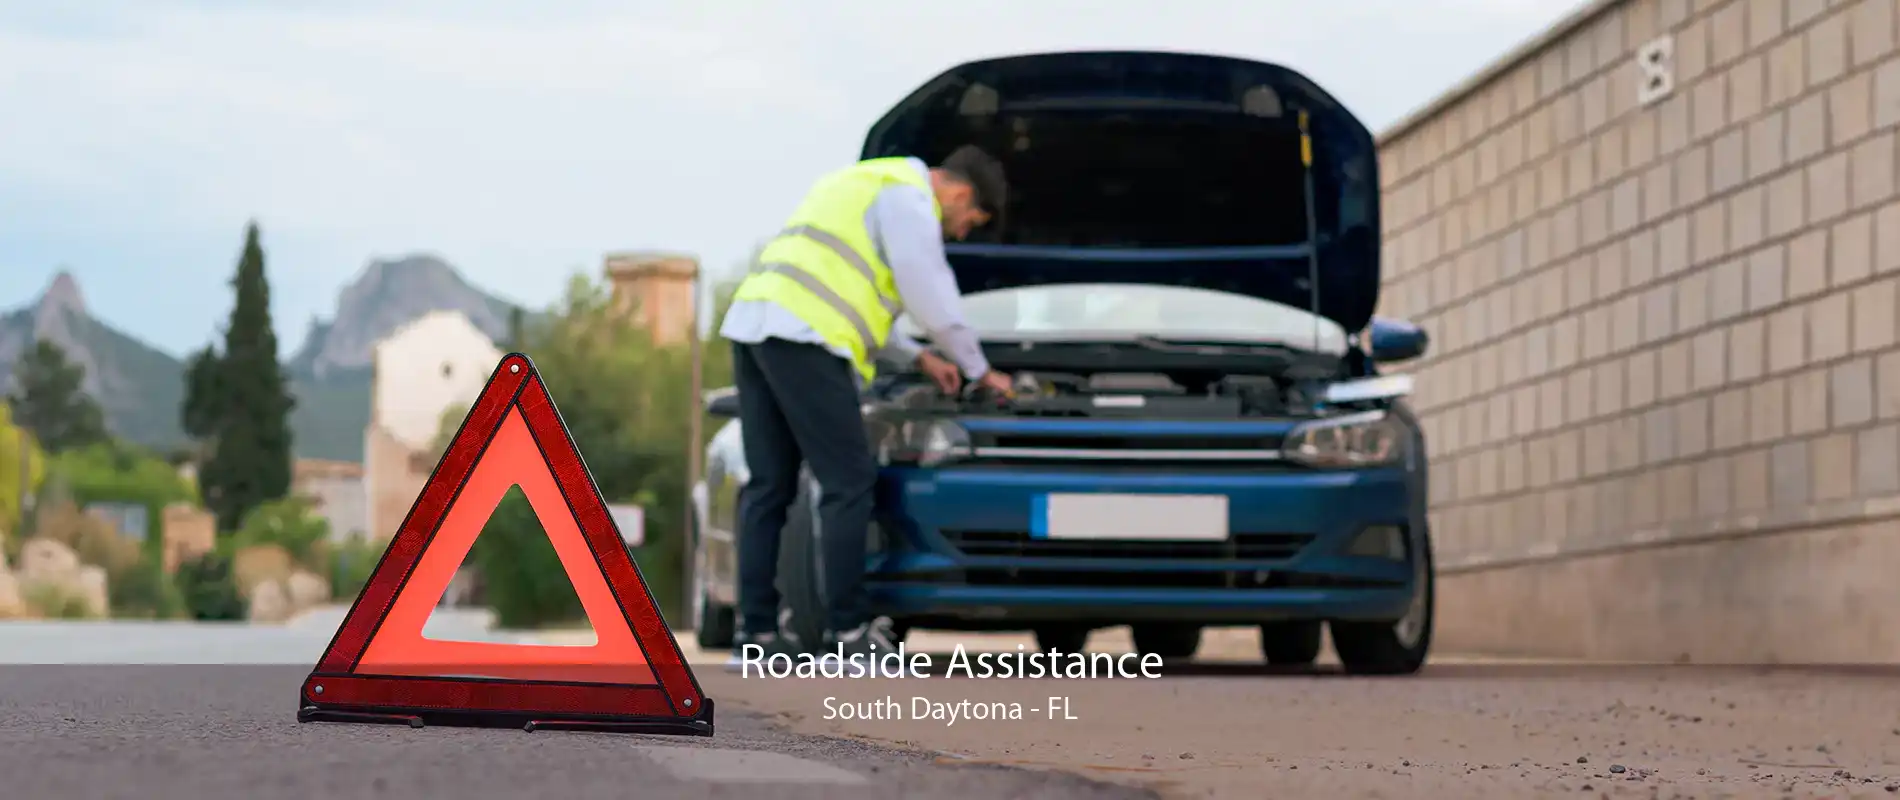 Roadside Assistance South Daytona - FL